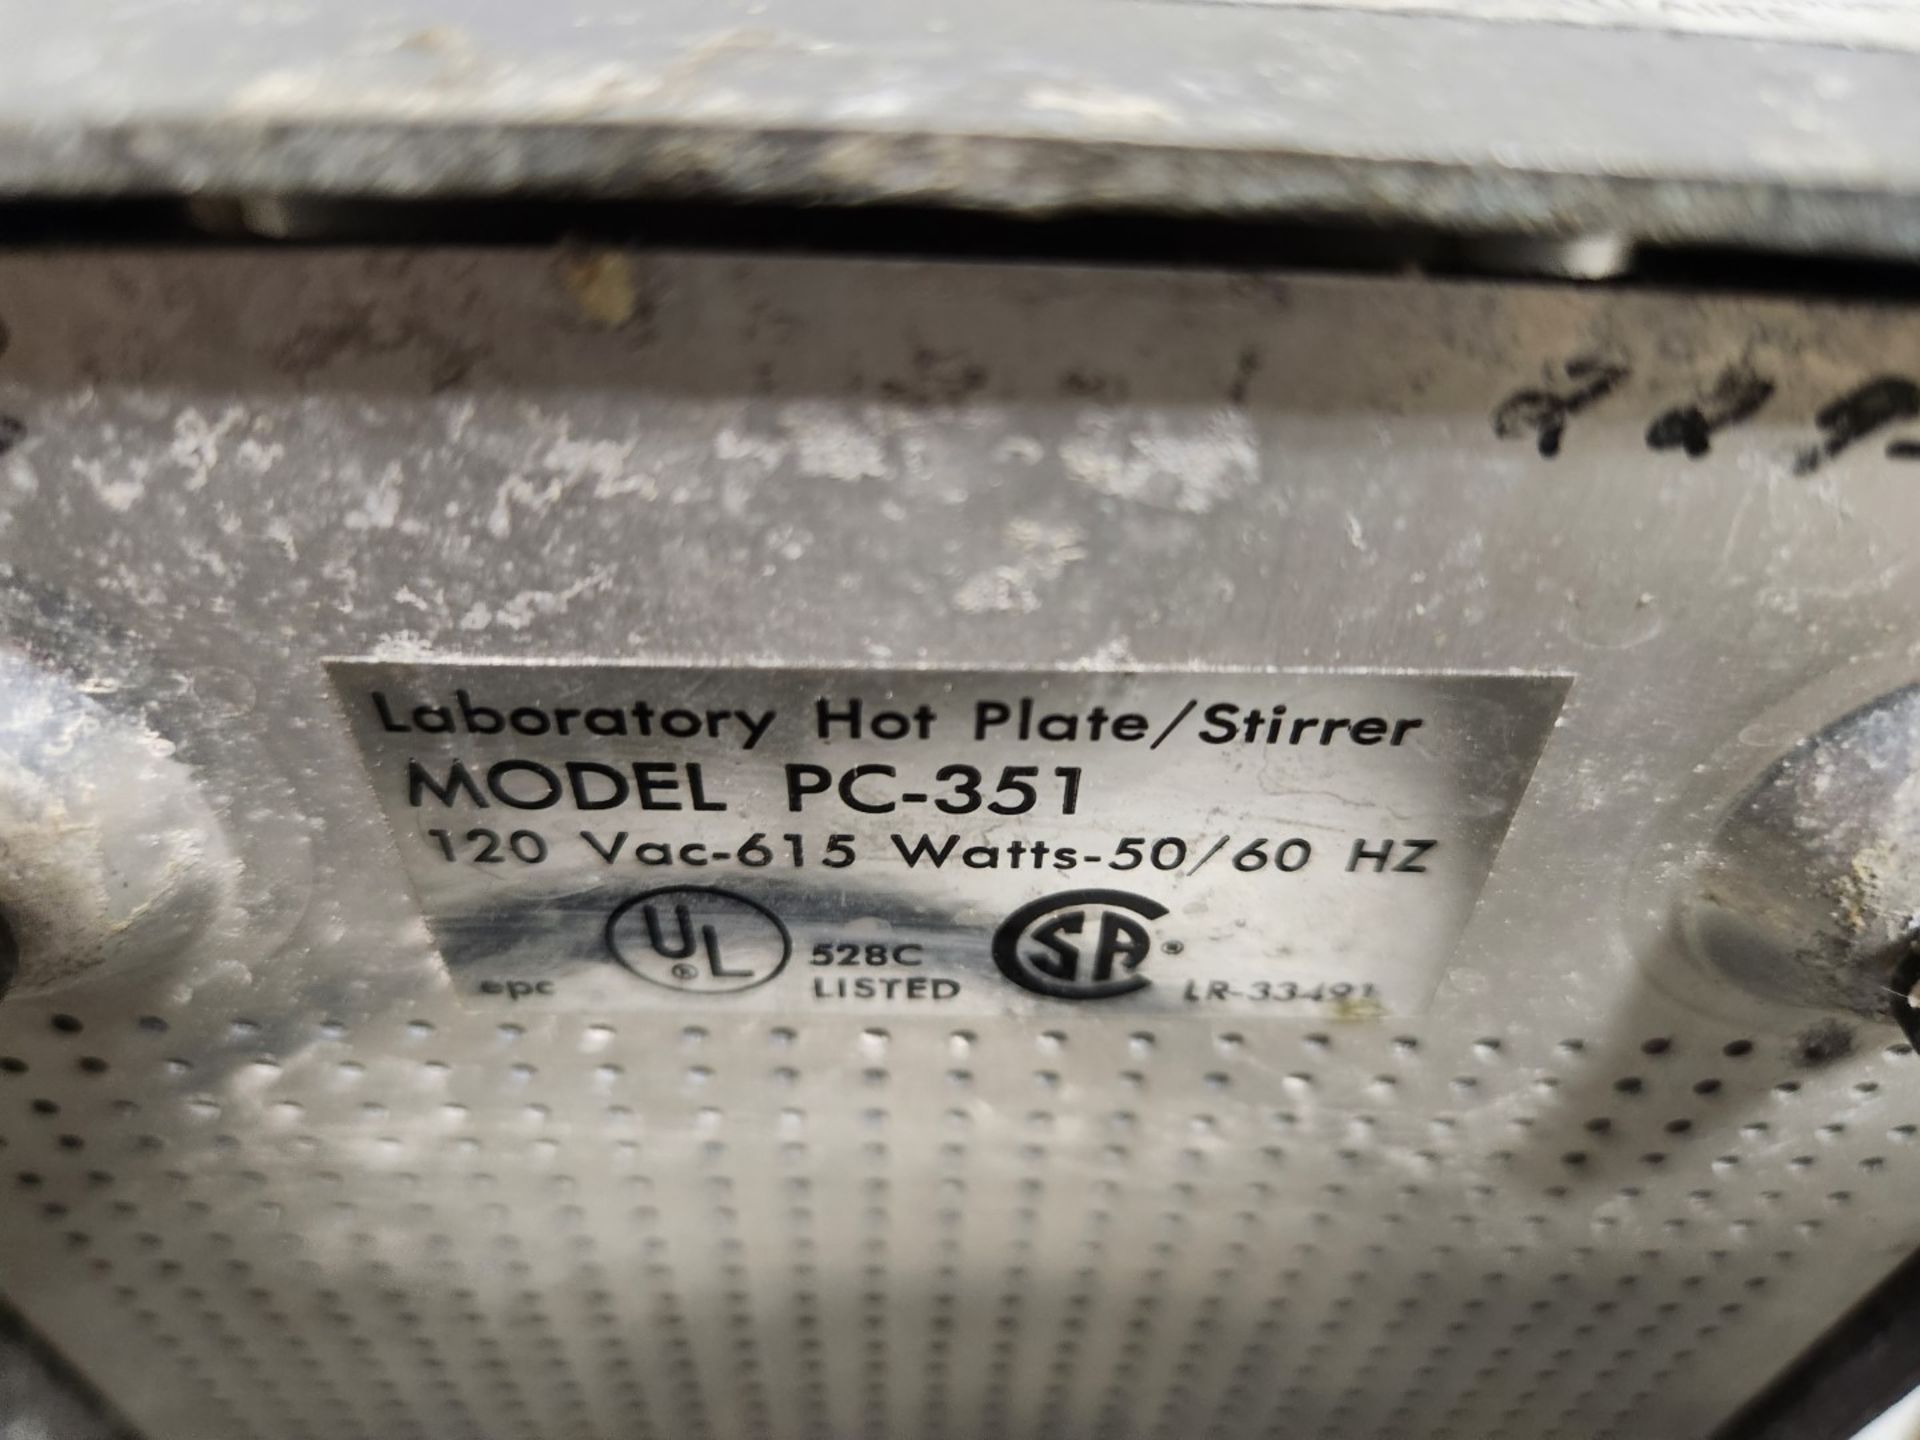 Corning Hot Plate/Stirrer, Model PC351 - Image 2 of 3